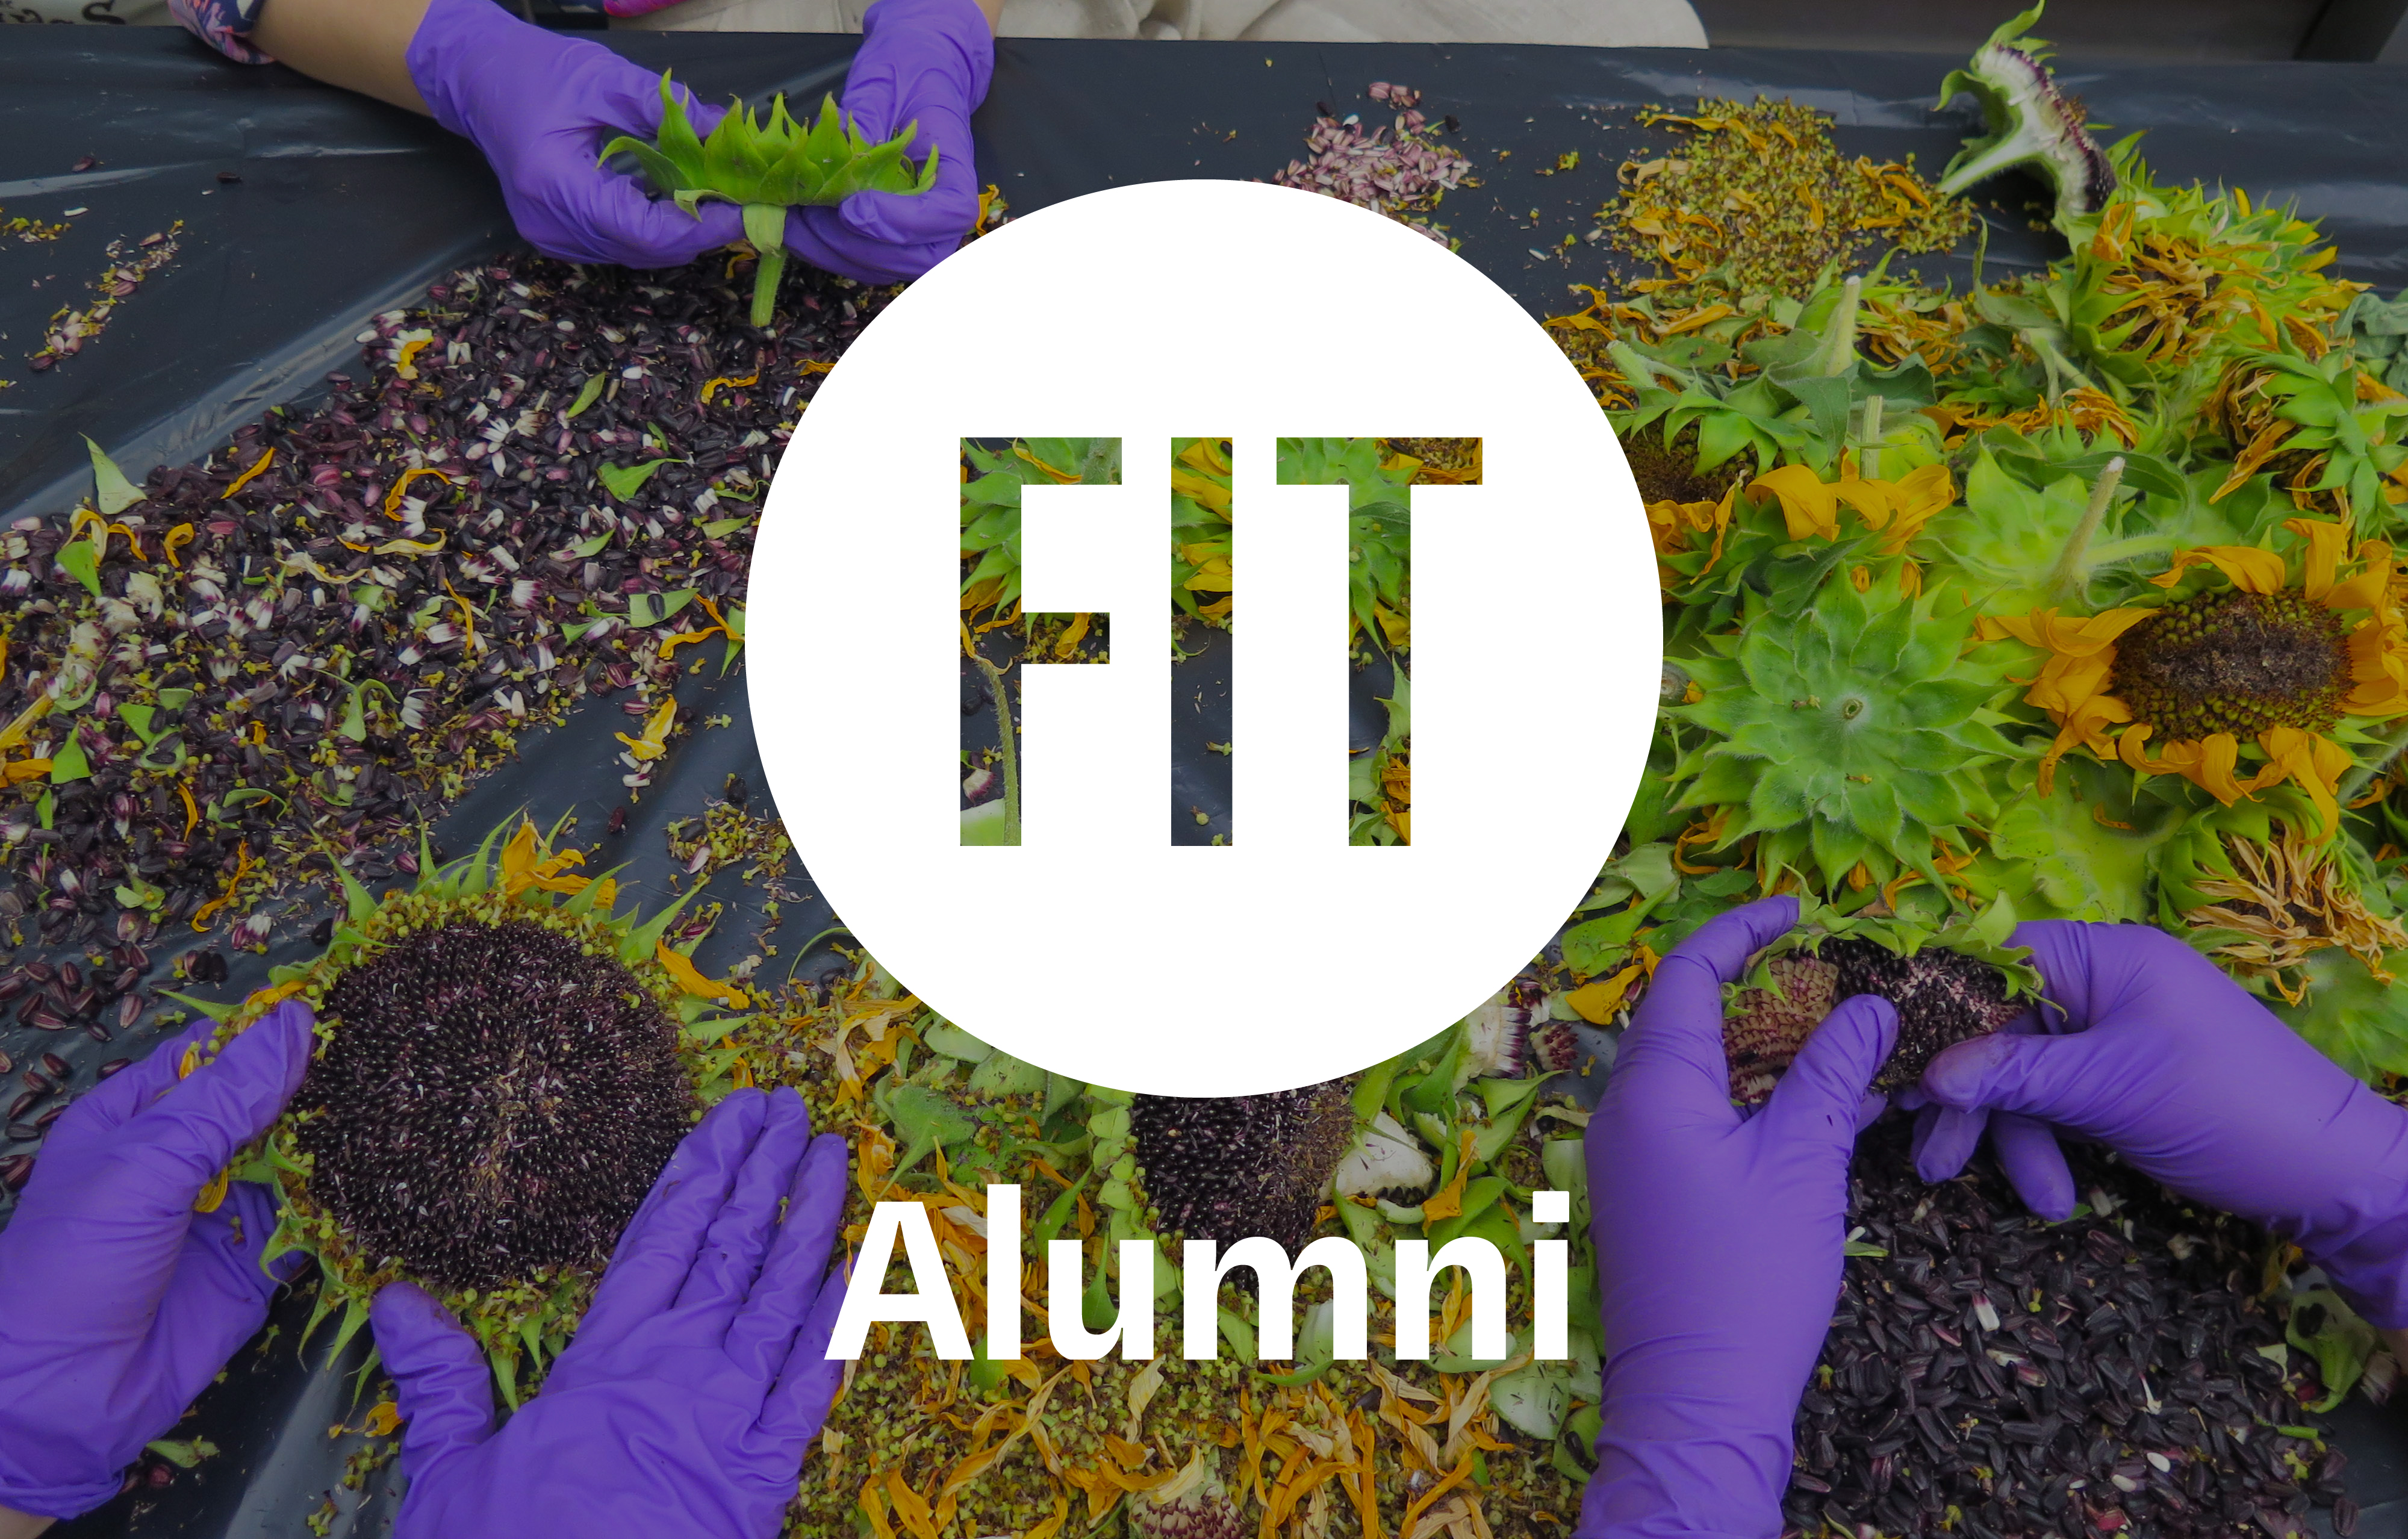 FIT alumni logo and dye garden image